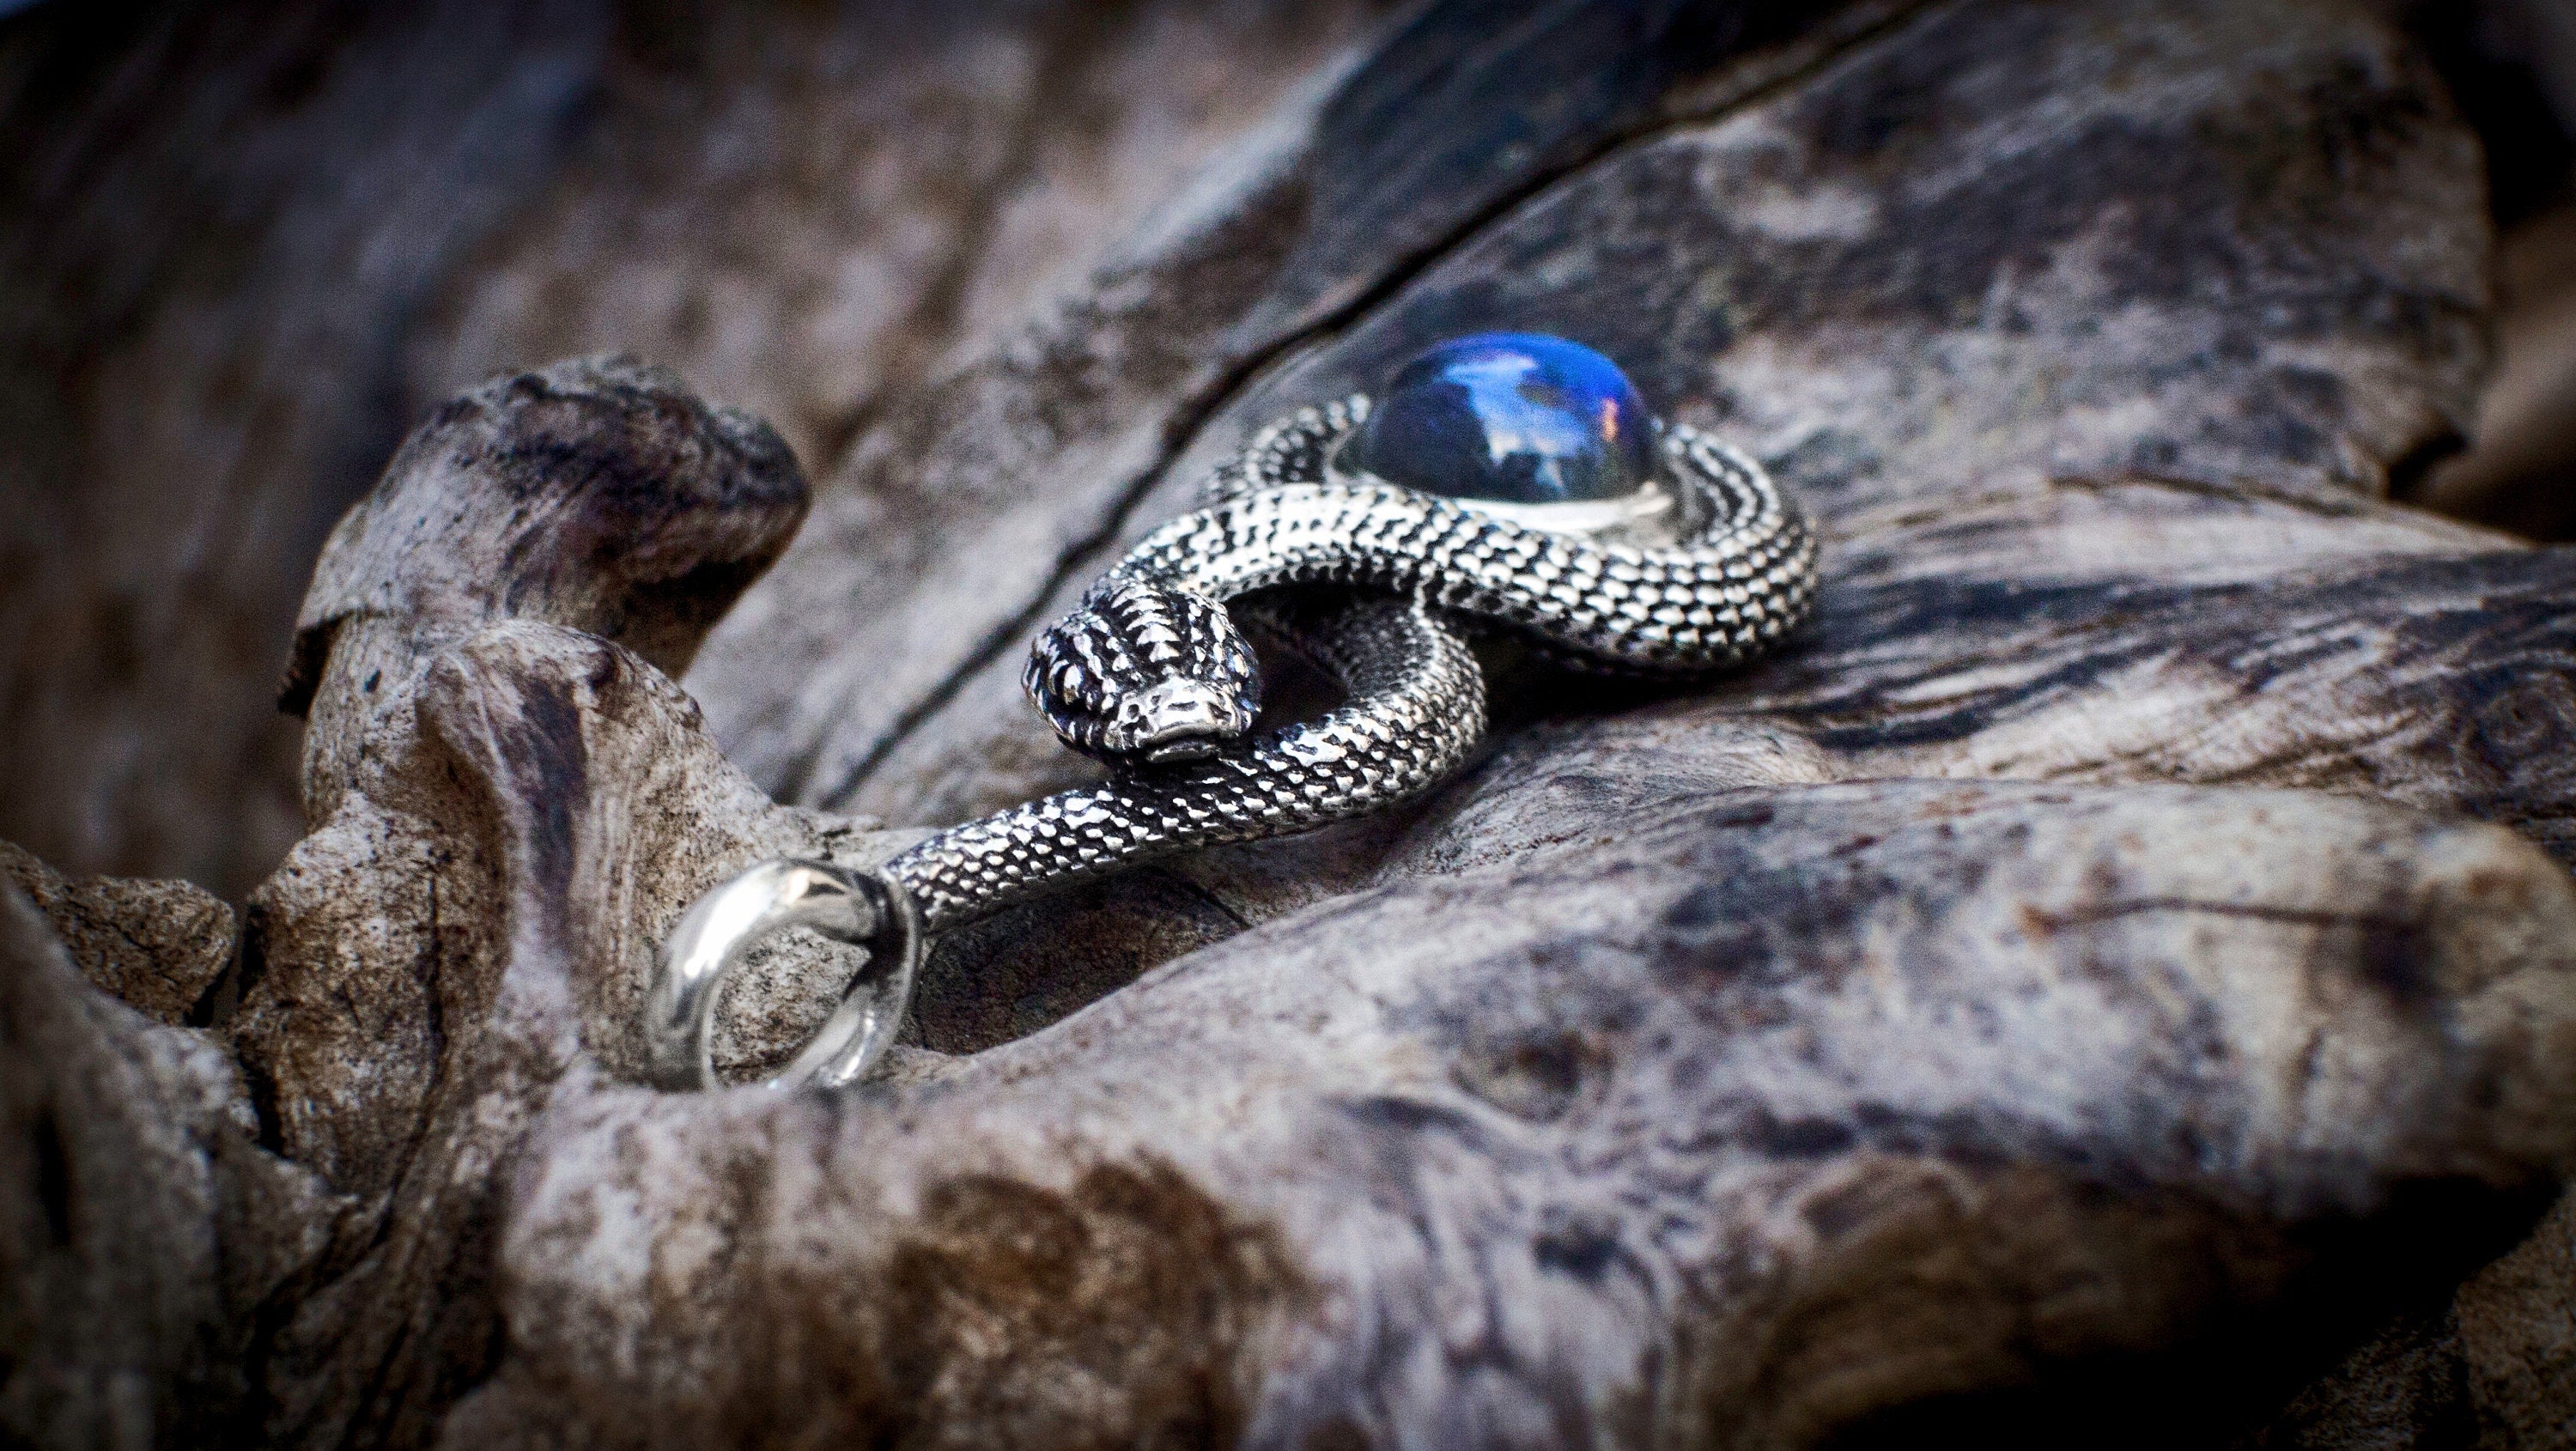 Silver Snake Pendant